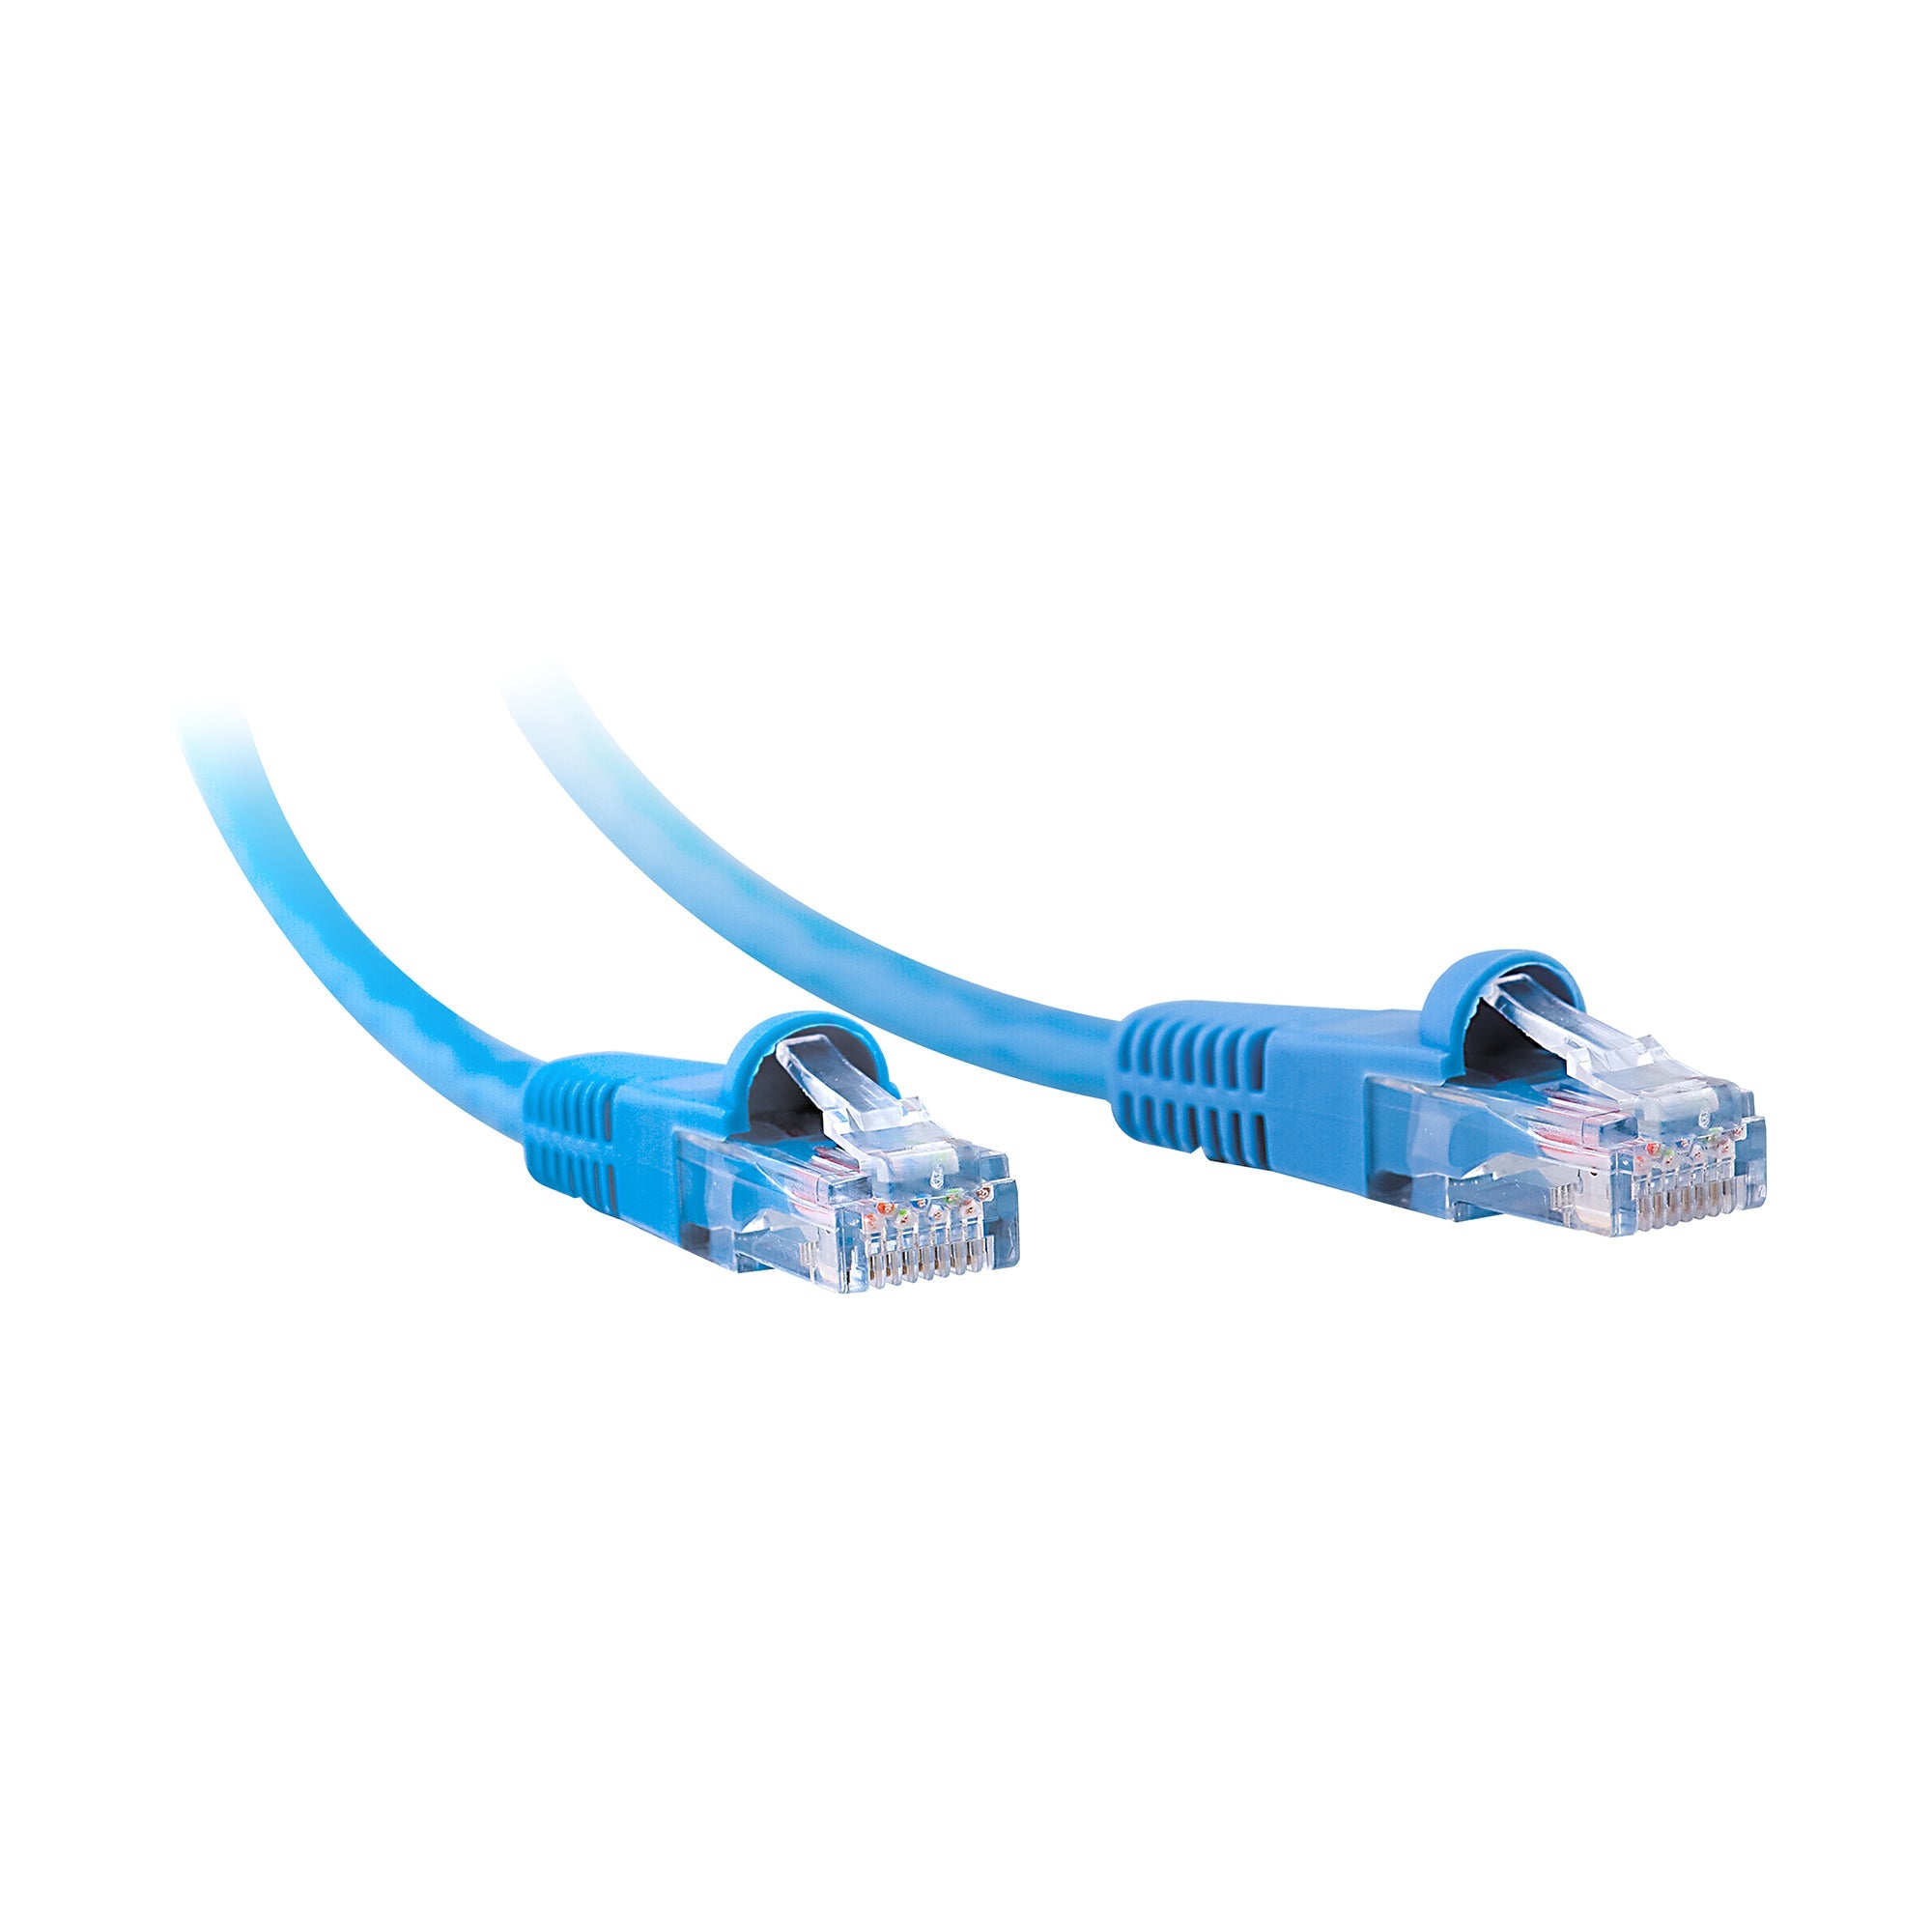 10m CAT6 RJ45 Ethernet Network Cable